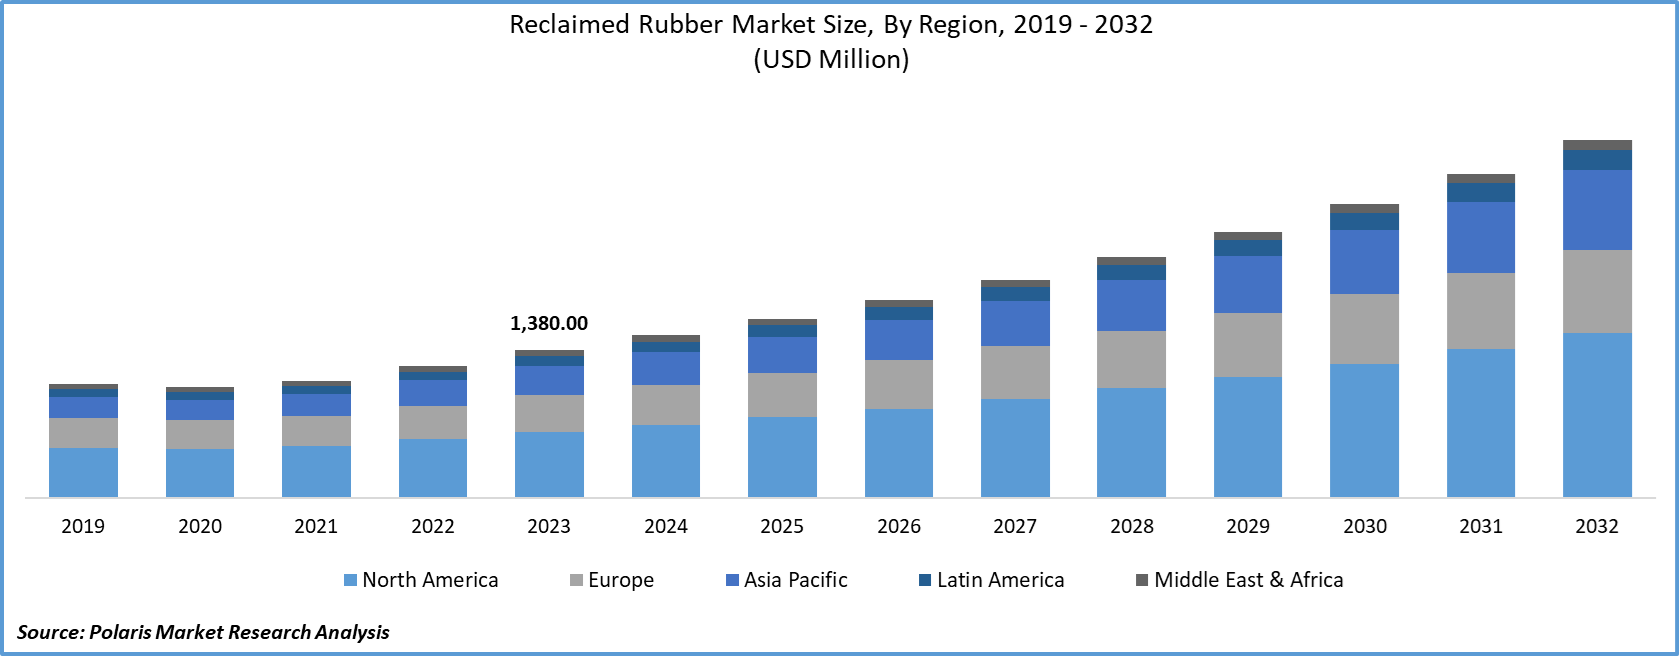 Reclaimed Rubber Market Size